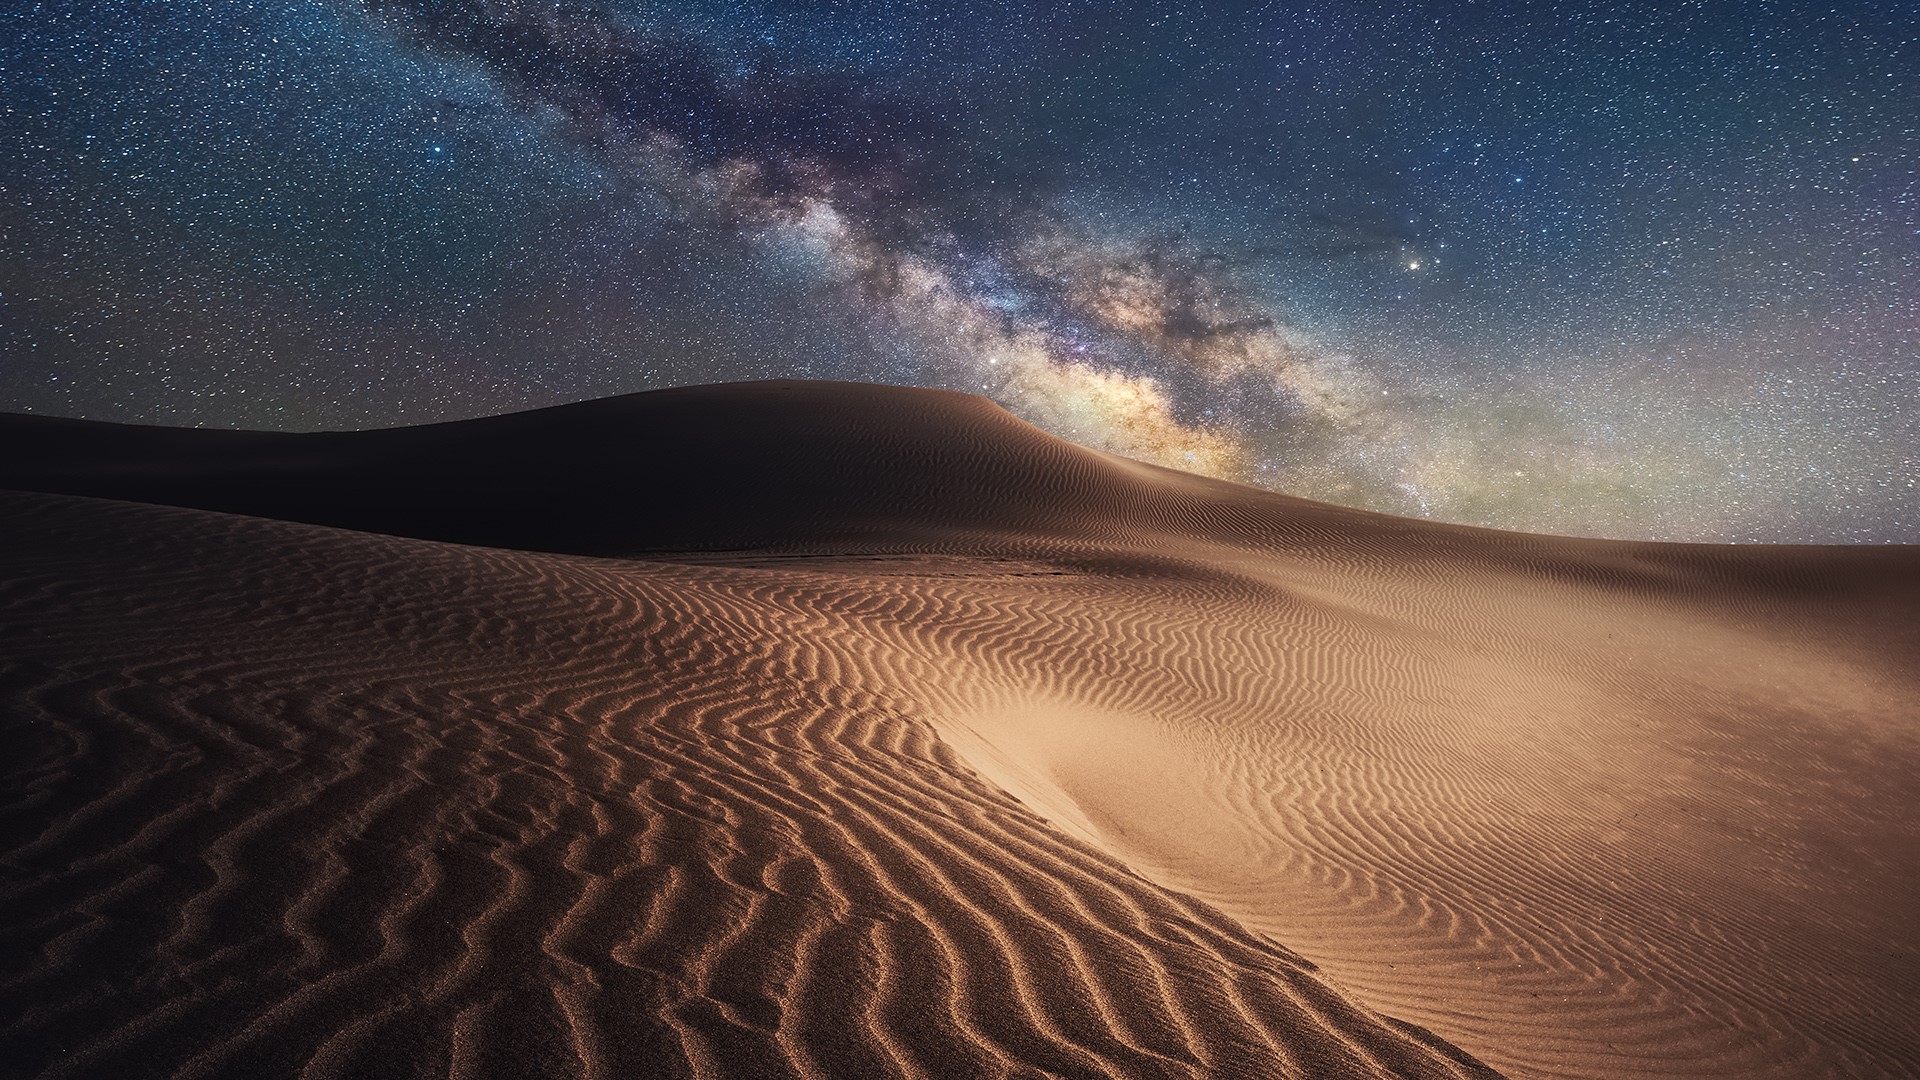 General 1920x1080 nature landscape sand desert Gobi Desert Mongolia China stars night Milky Way